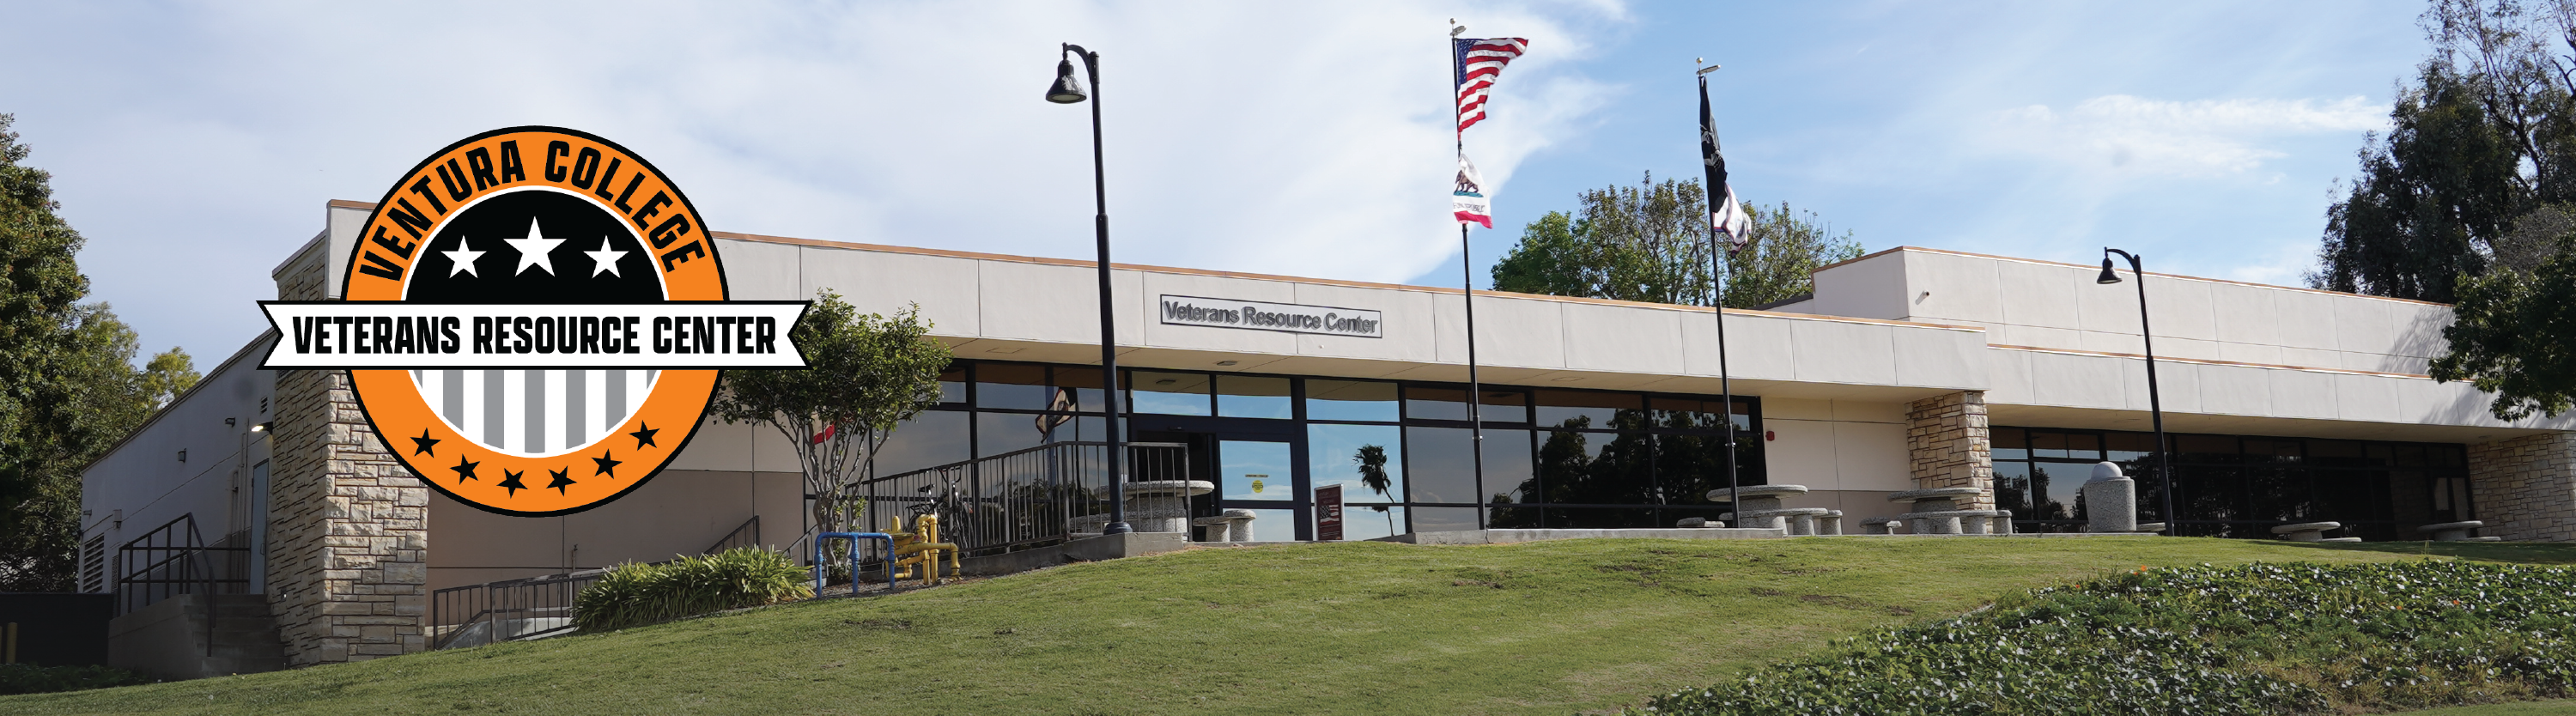 veterans resource center